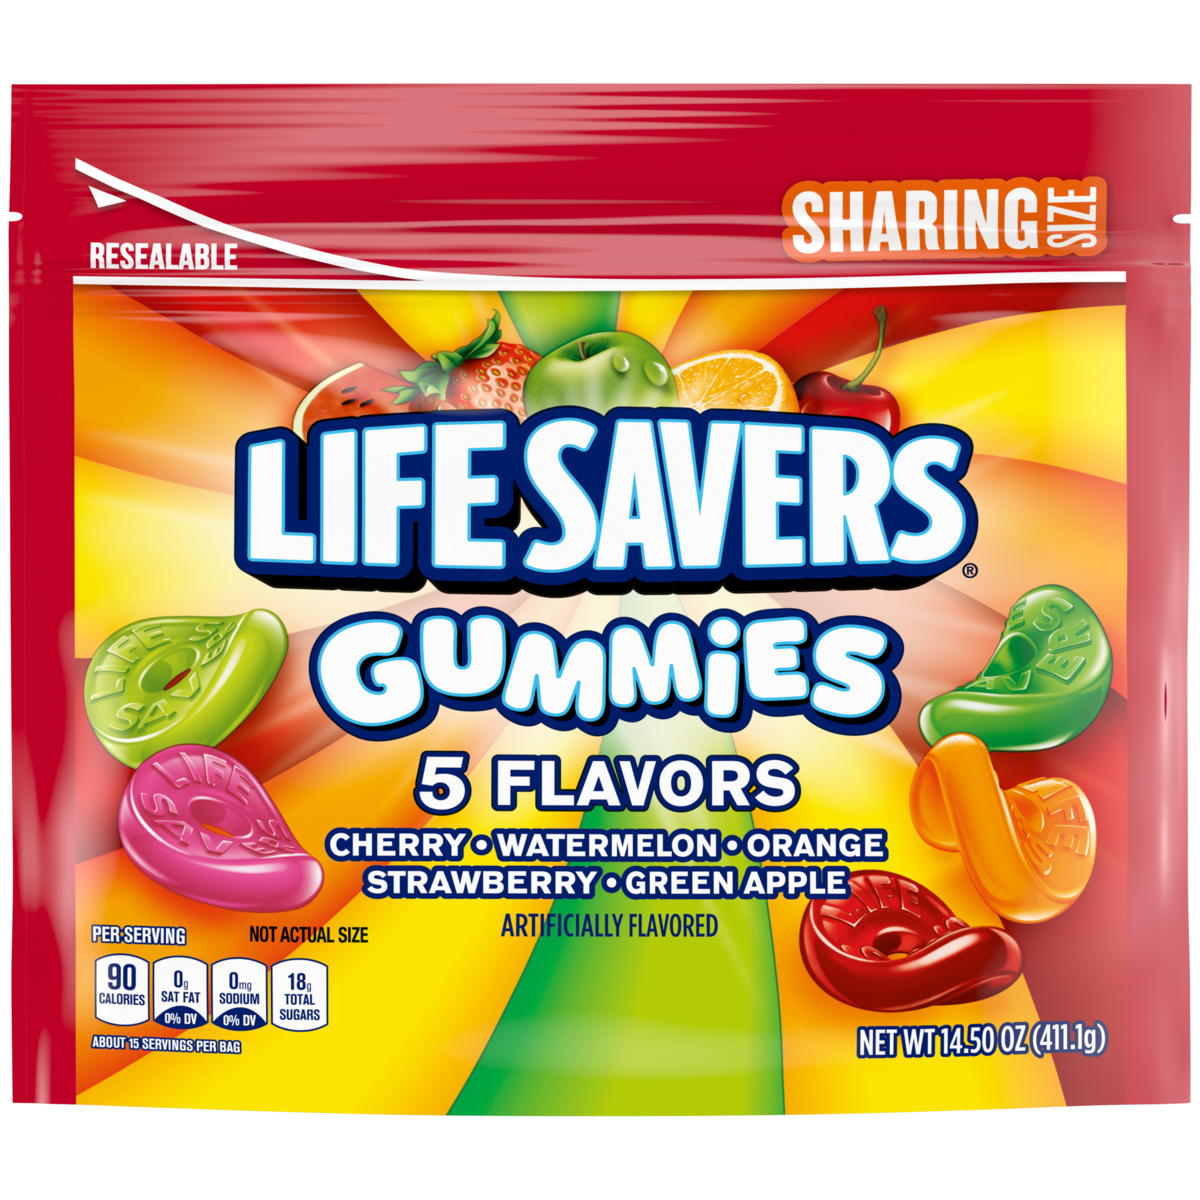 Life savers 5 flavor gummies k/s 14.5oz